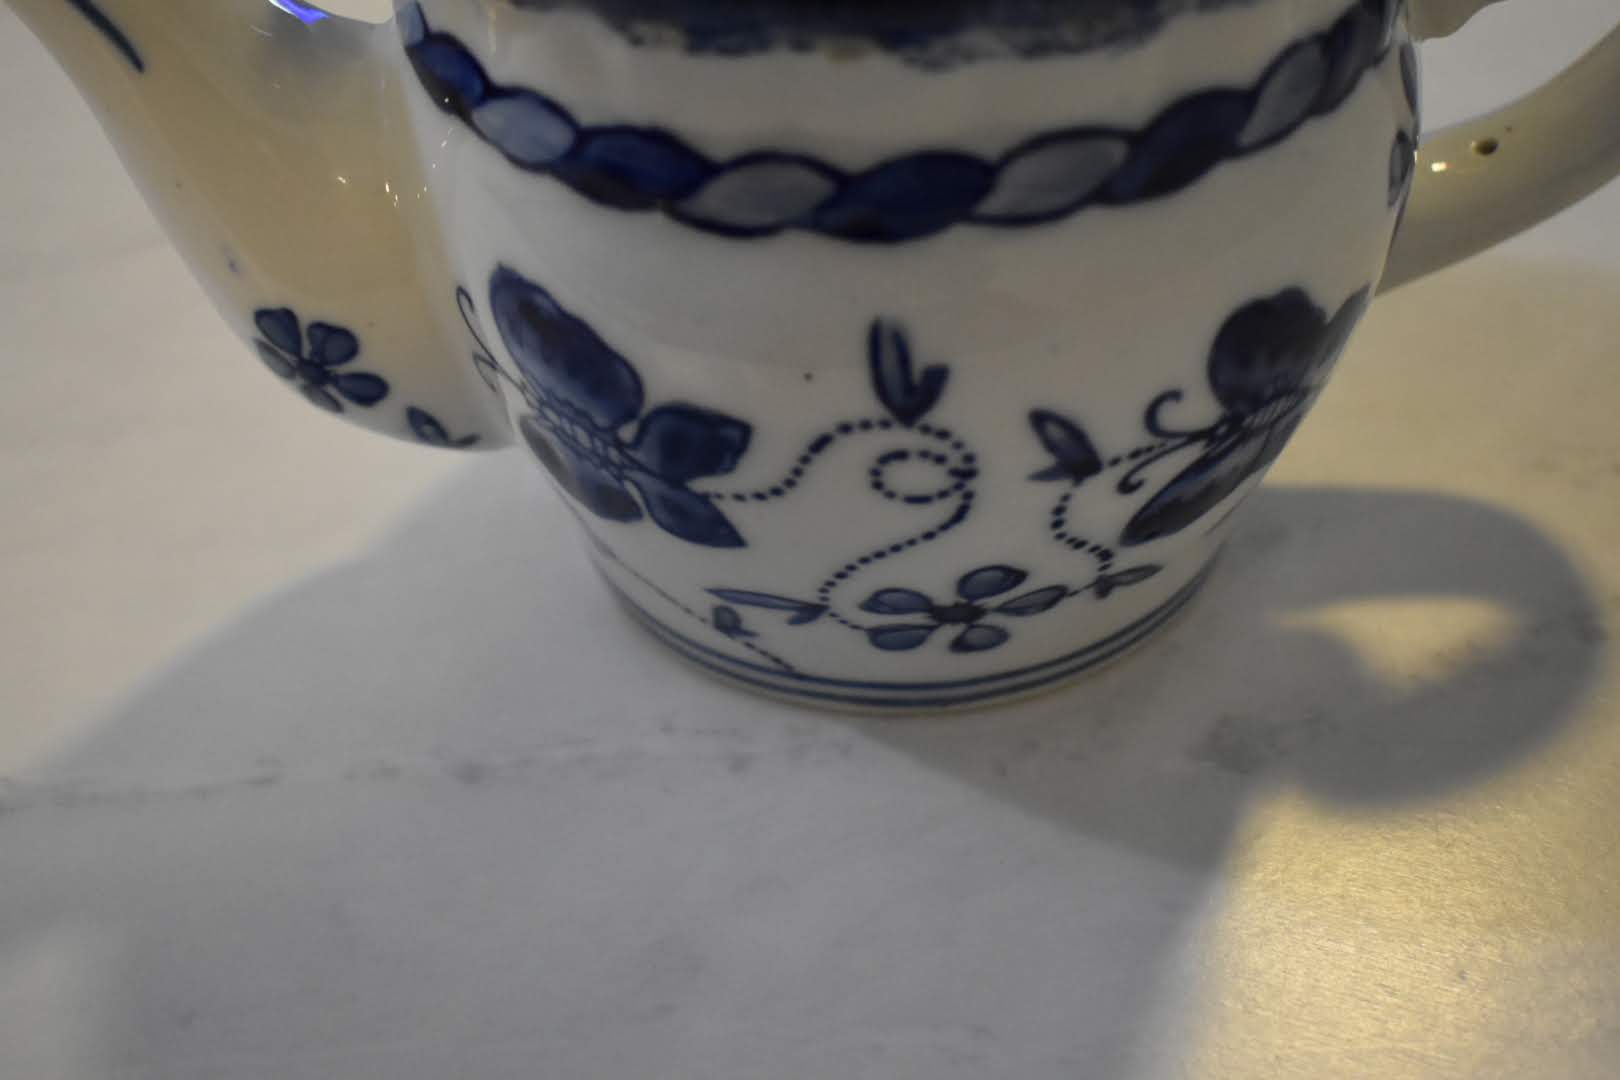 Blue White Floral Design - Ceramic Porcelain Oriental - Mid Century Small Teapot - Wall Decor - Table Decor